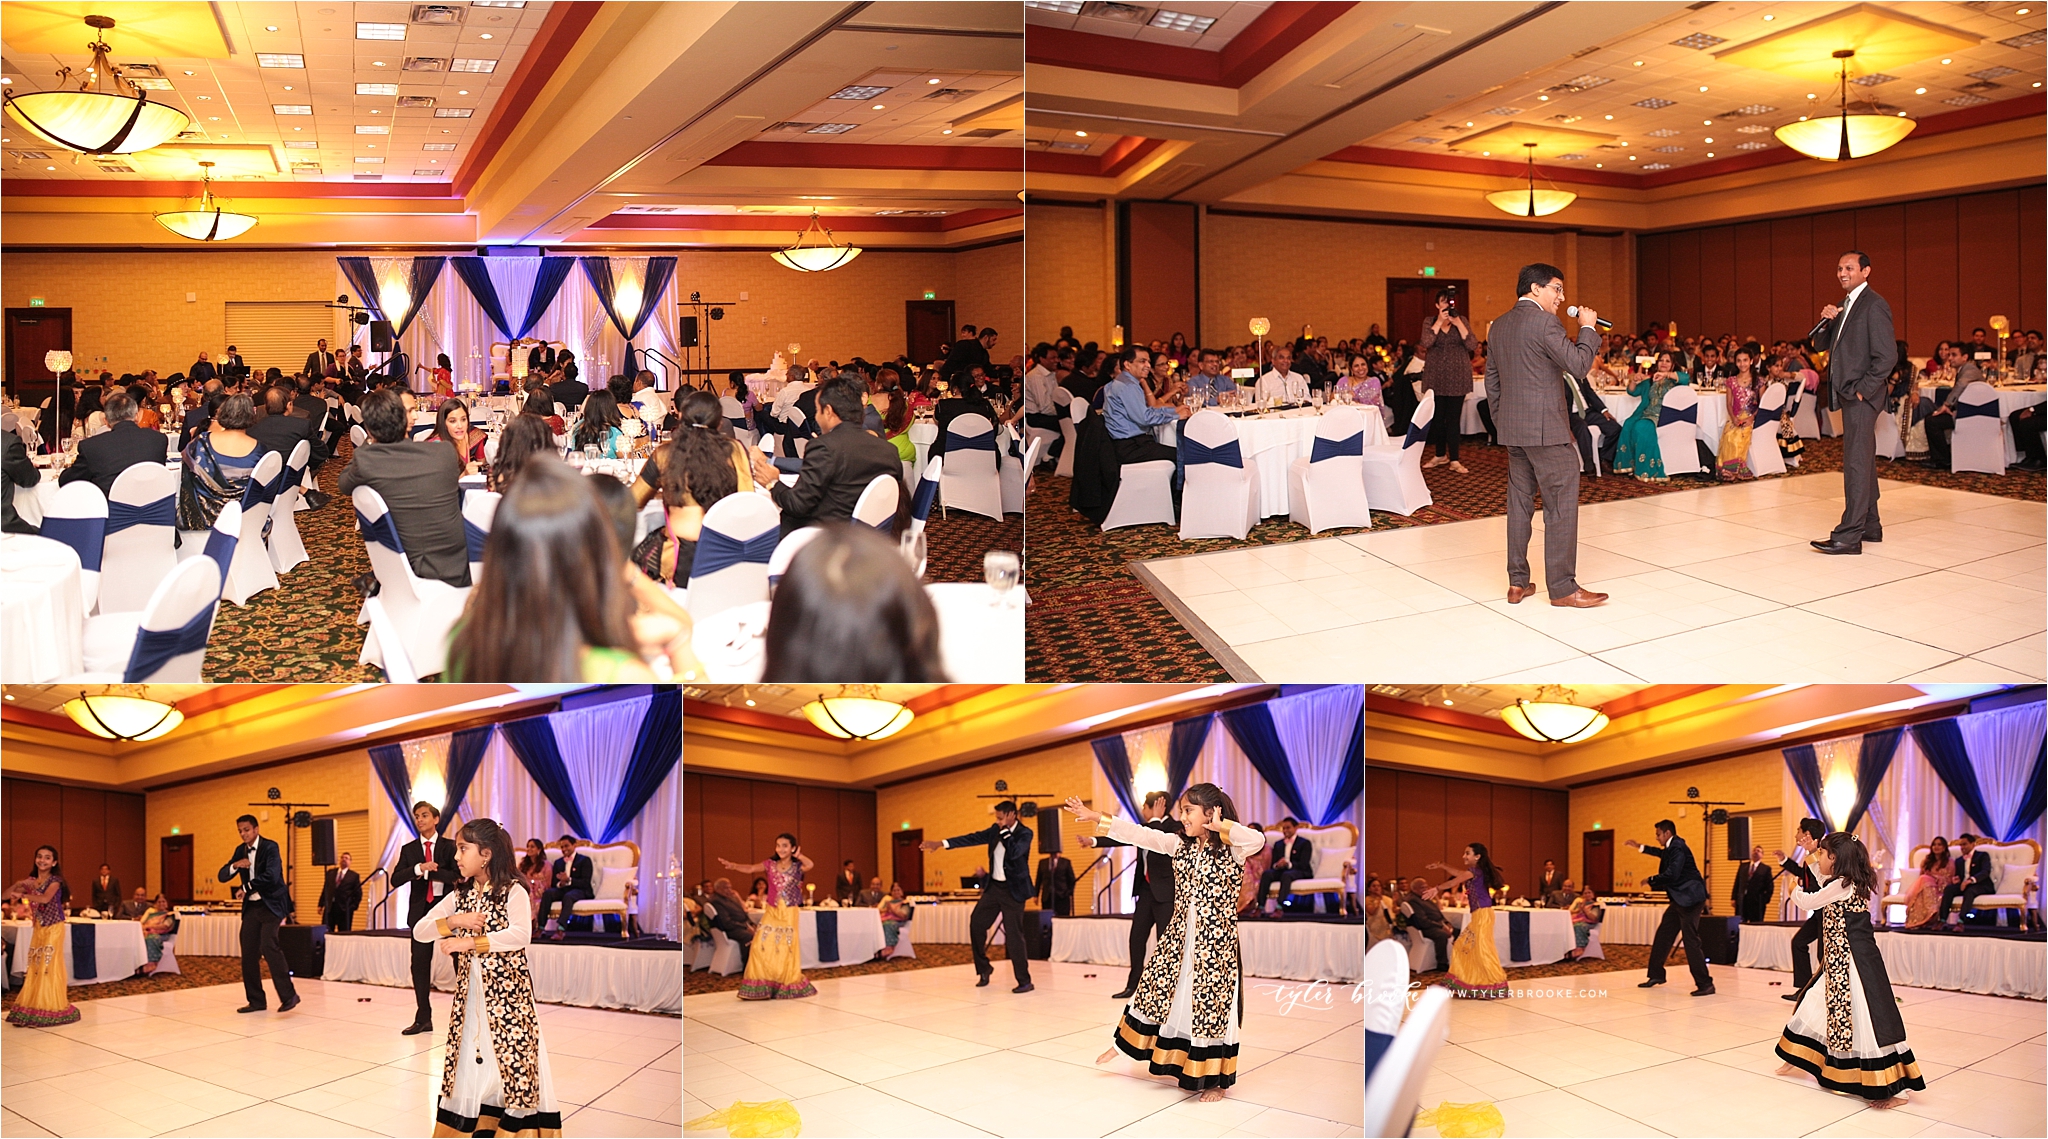 Albuquerque India Wedding Ceremony Reception